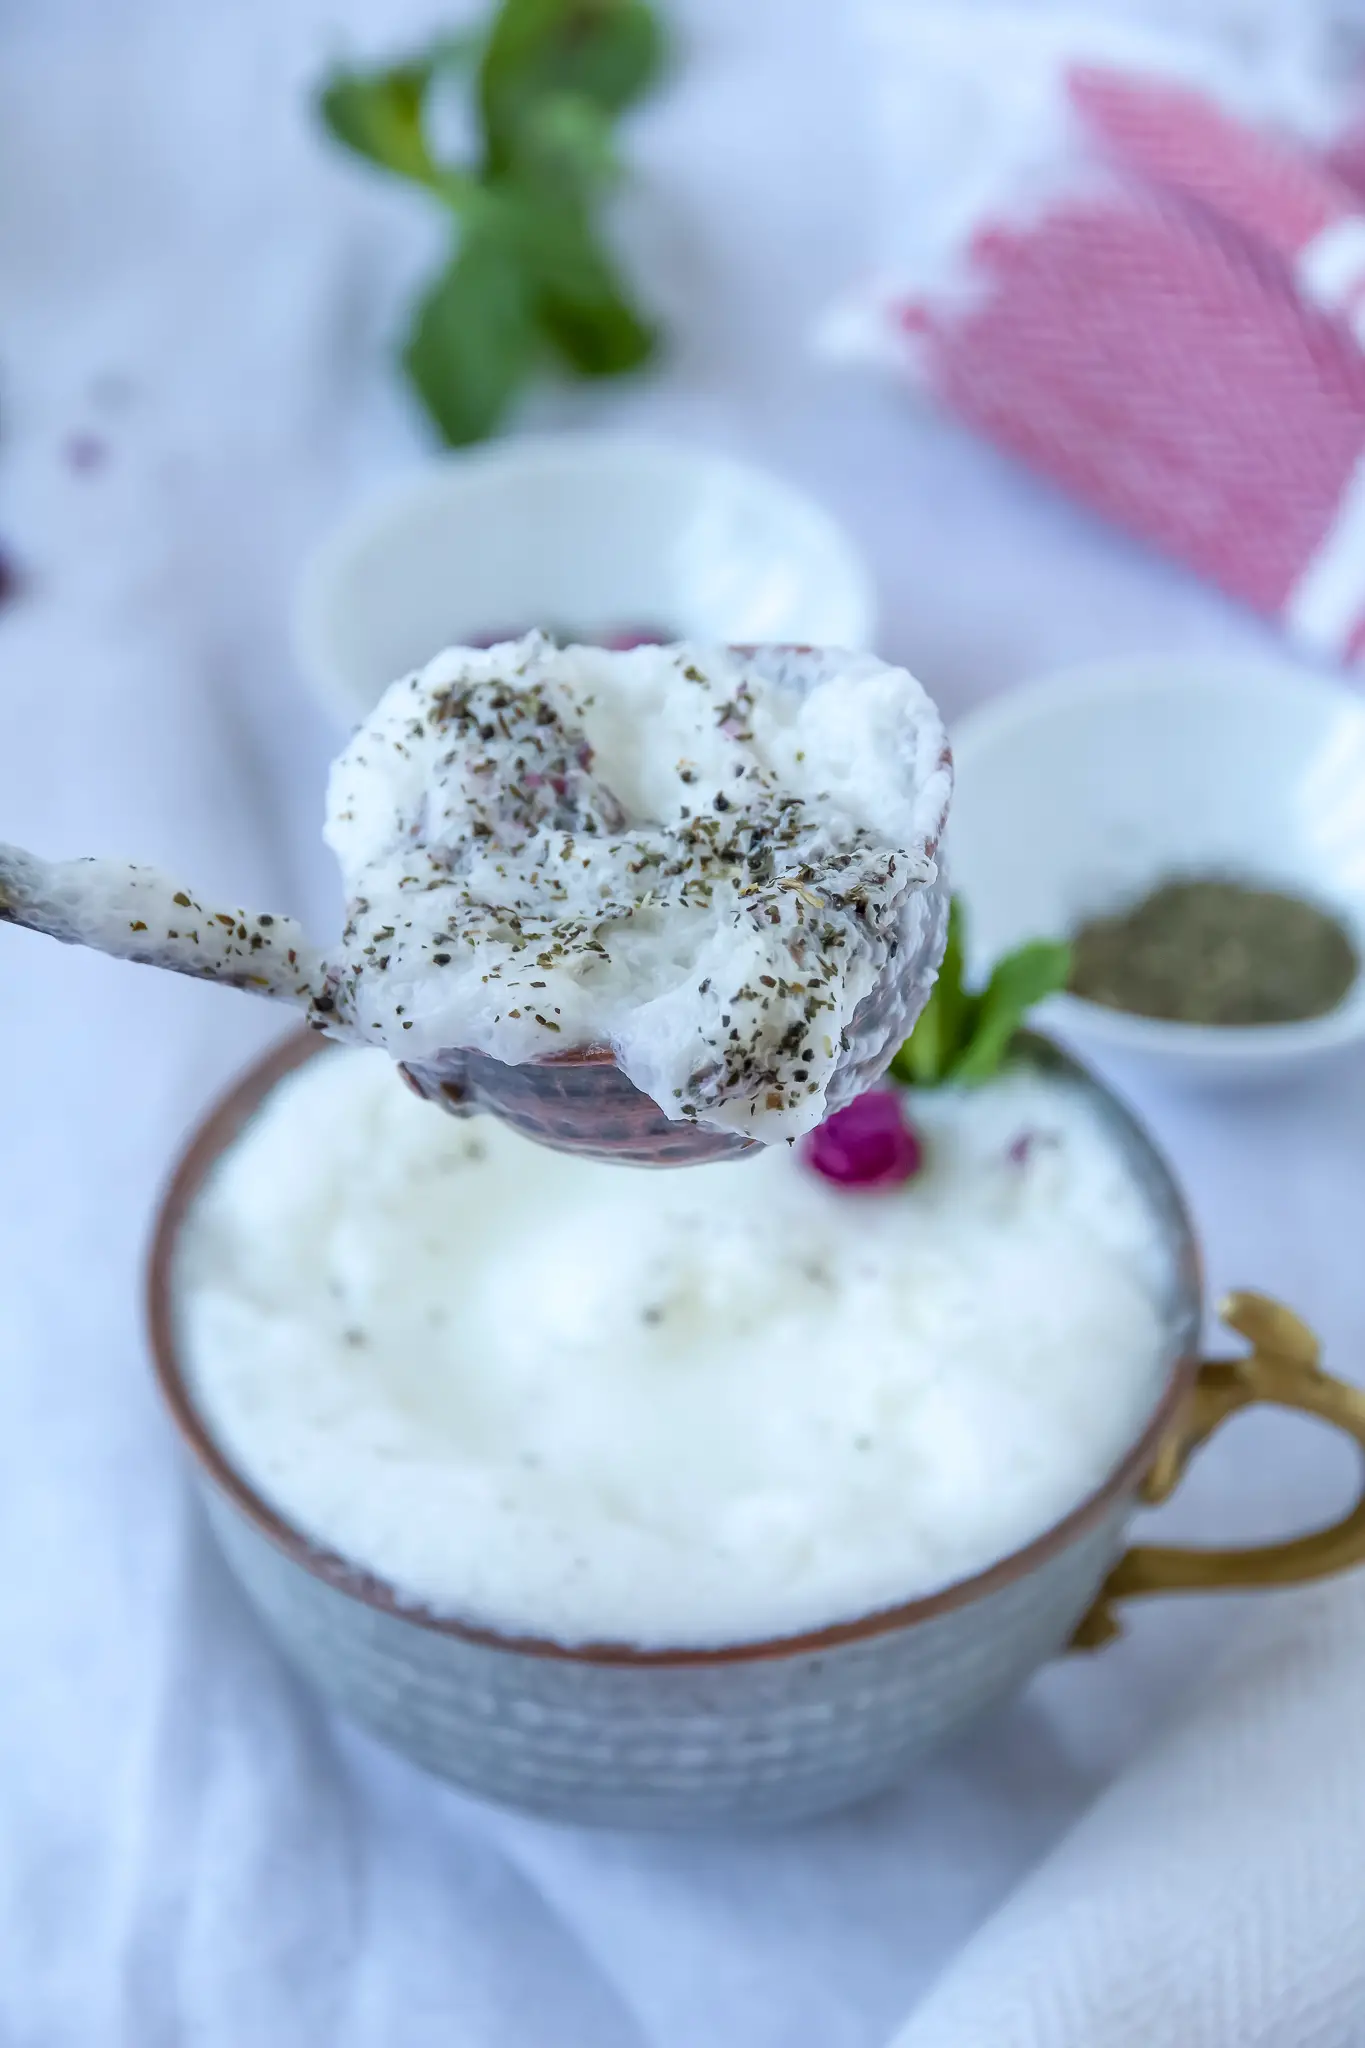 Dugh - Persisches Nationalgetränk mit selbst gemachtem Joghurt